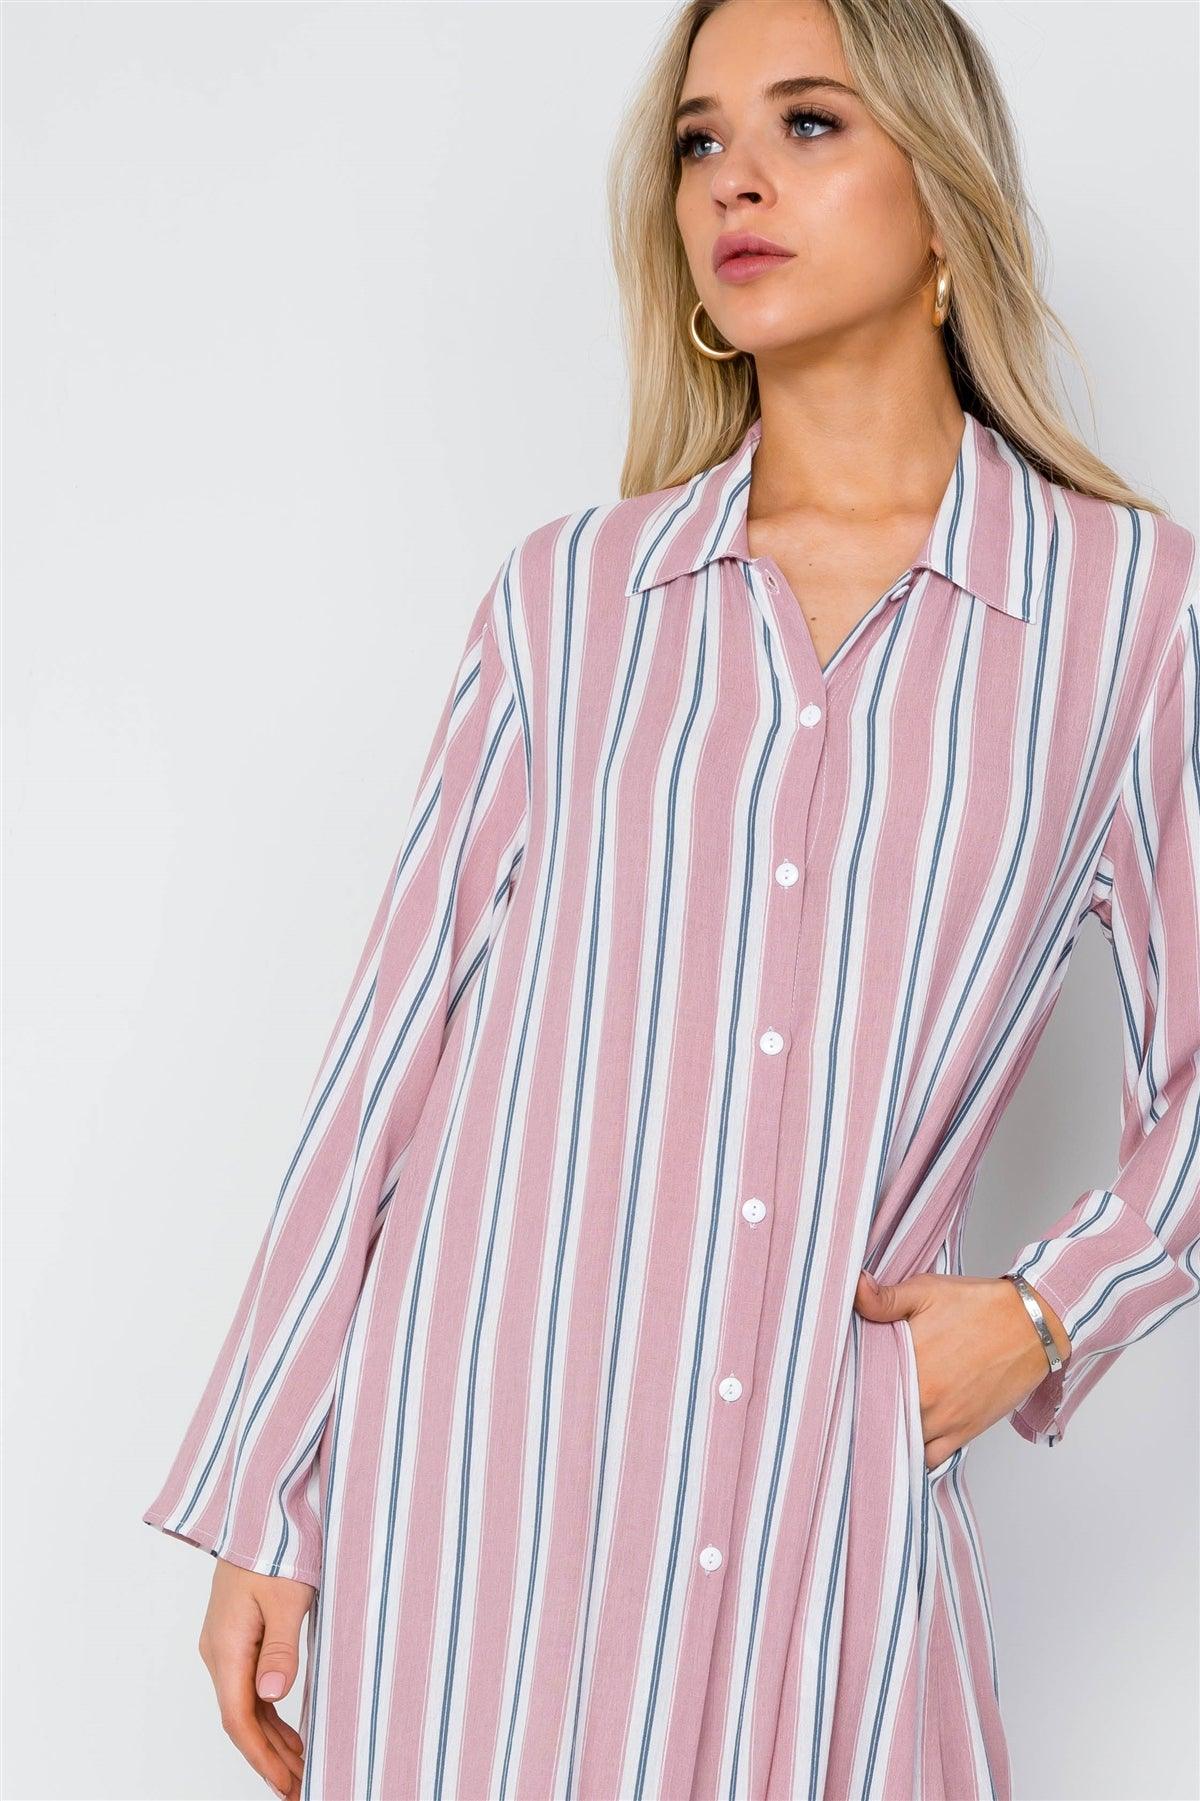 Mauve Multi Stripe Button Down Dress Maxi Blouse Shirt / 2-2-2